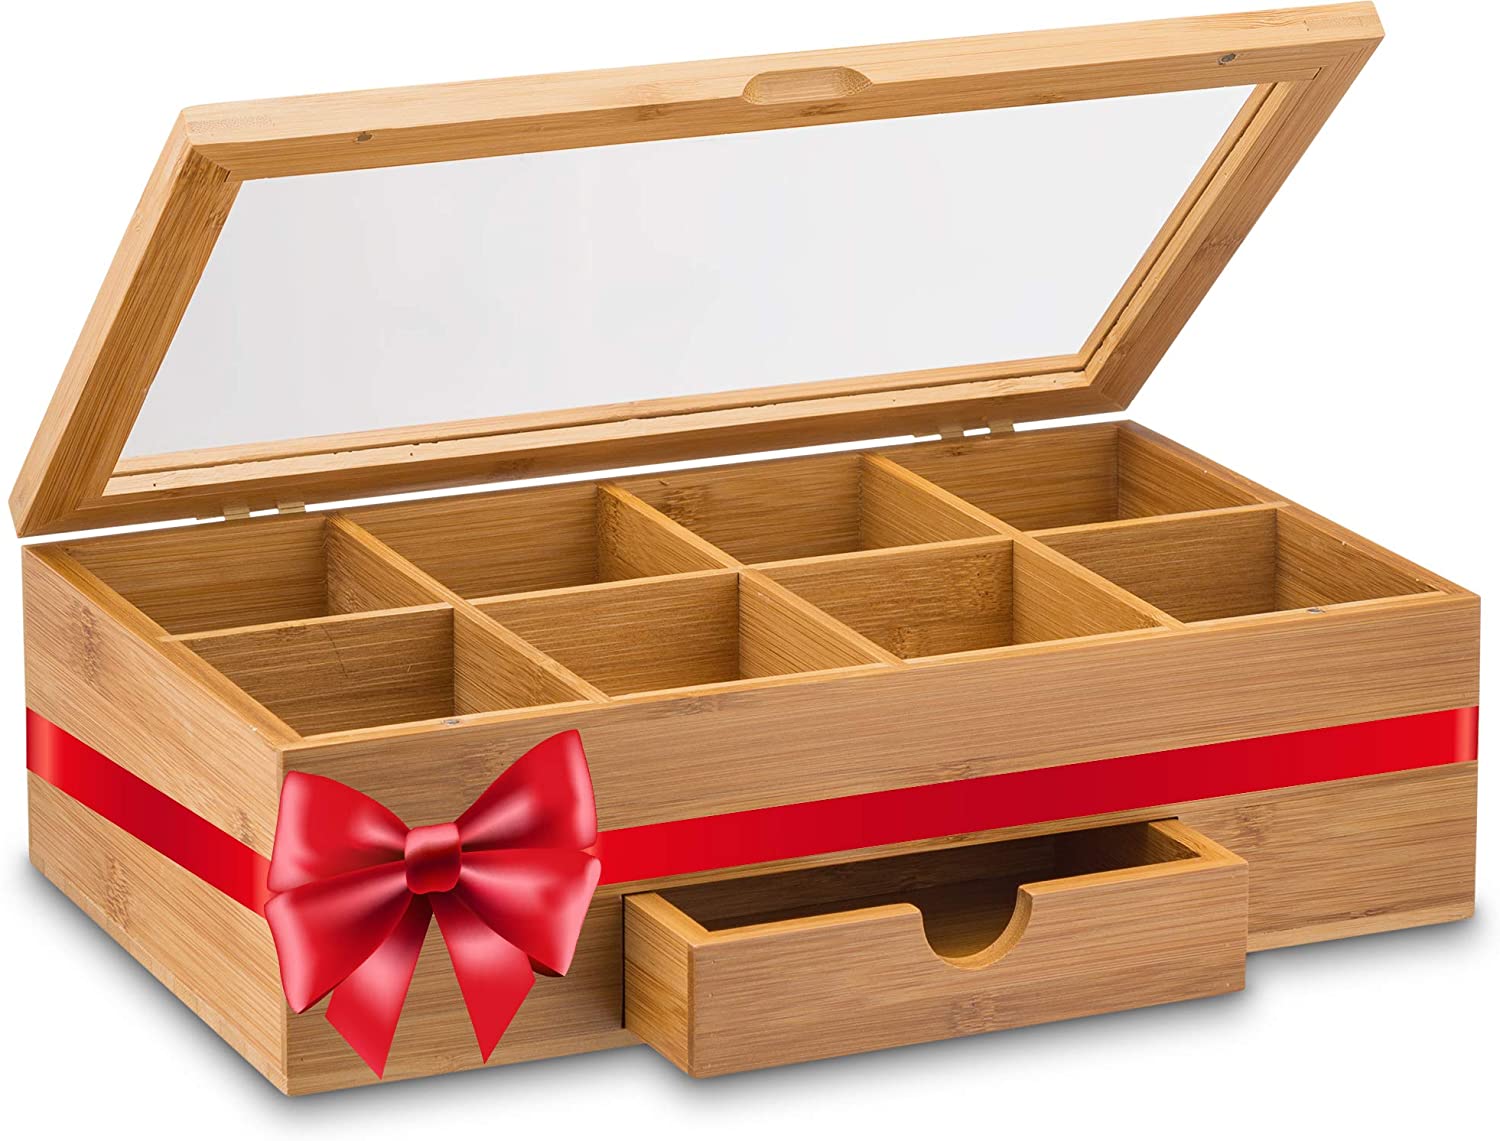 Kubo Bamboo 8 Cube Compartment Tea Box